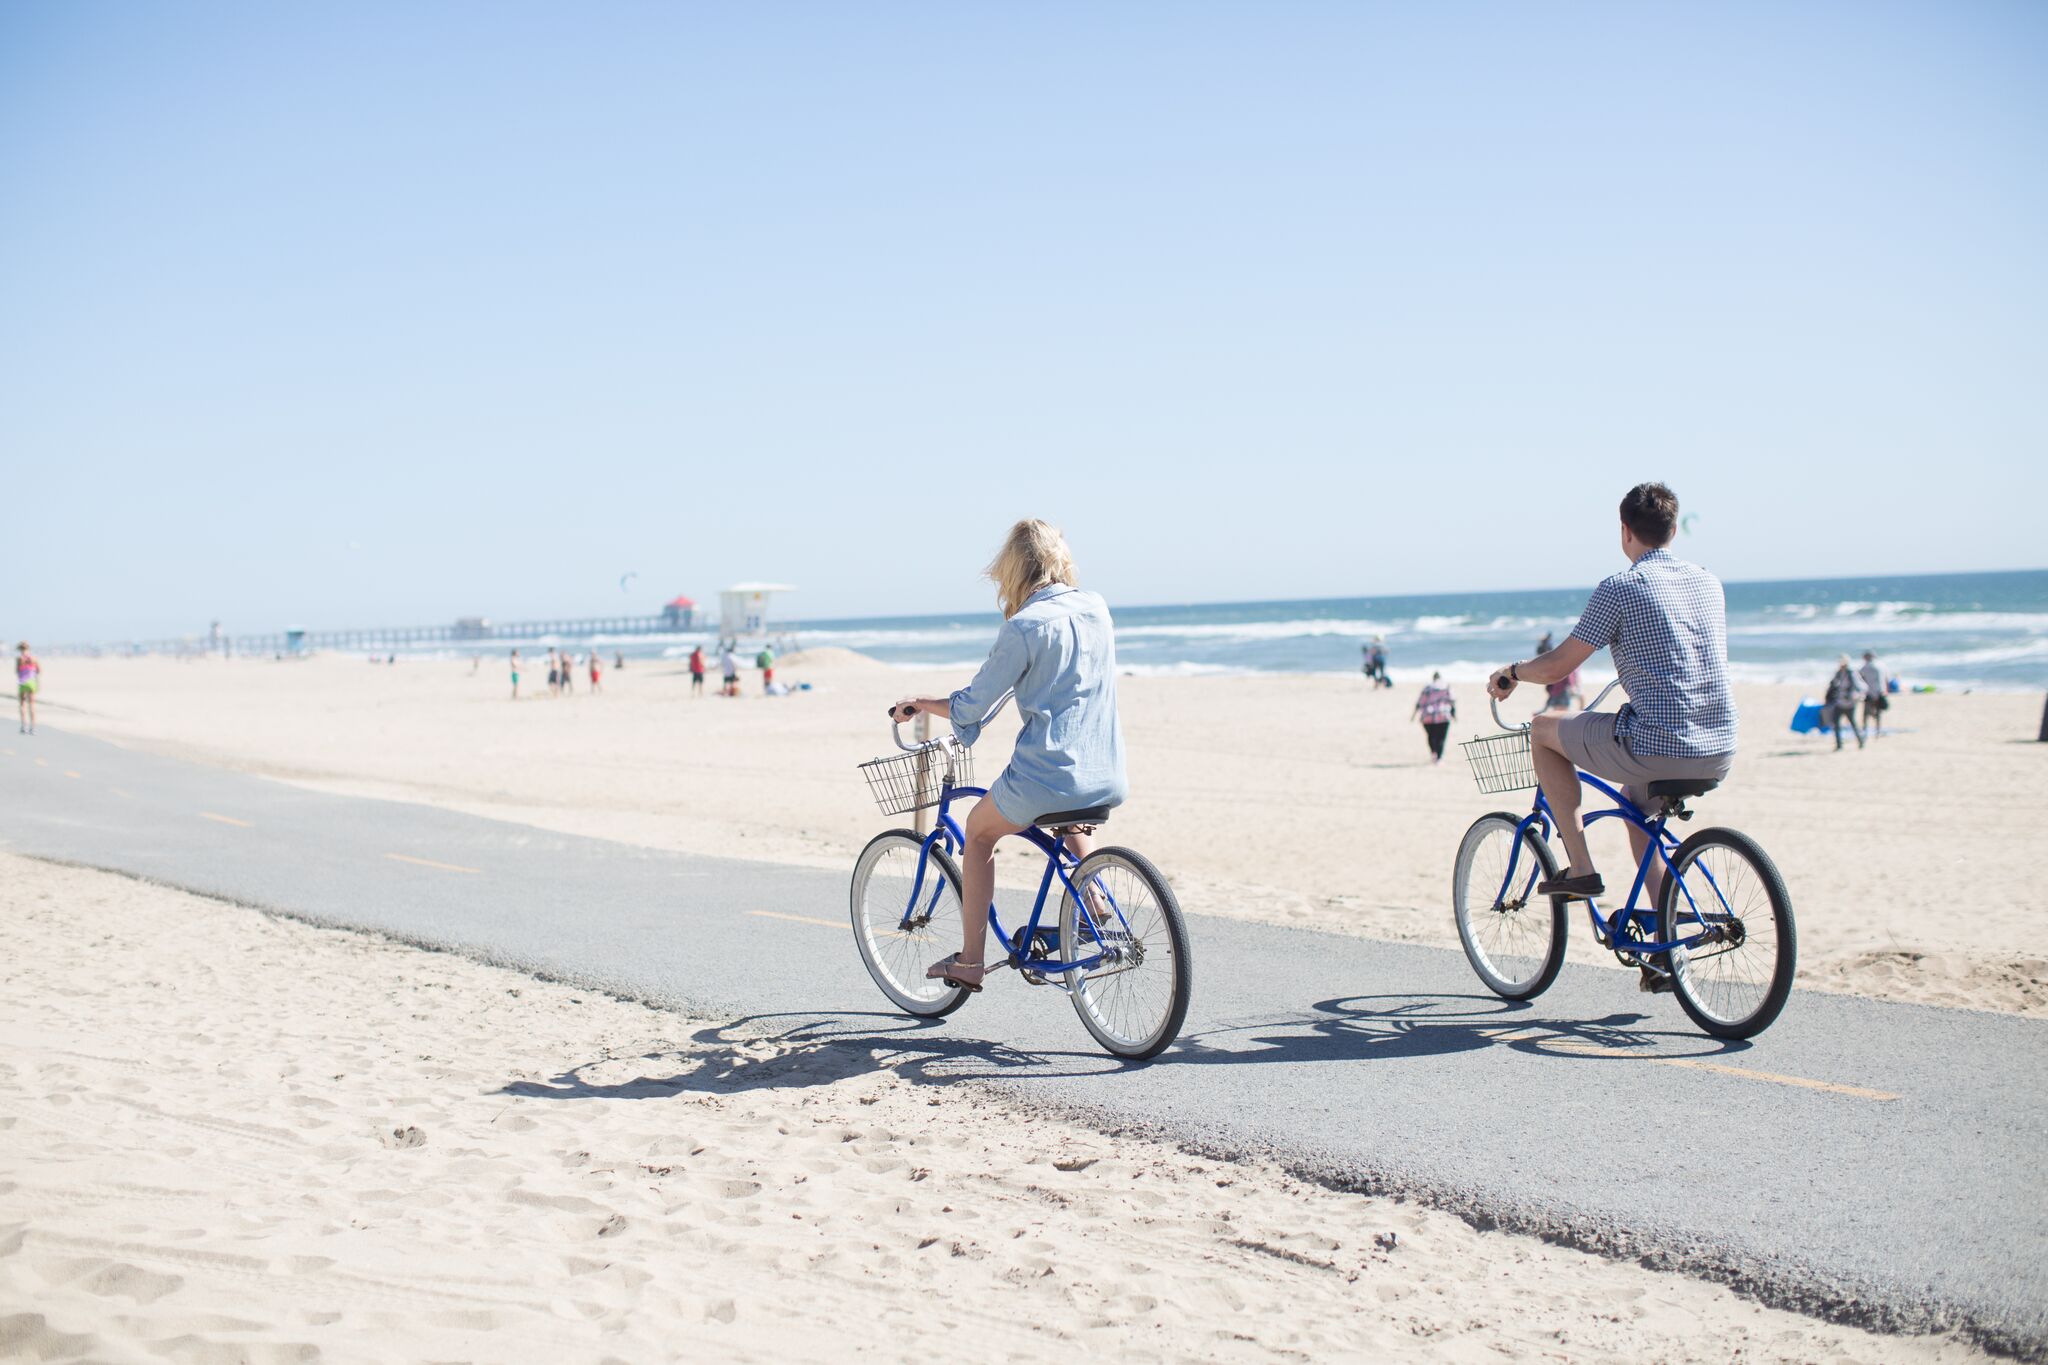 bike riding at the beach